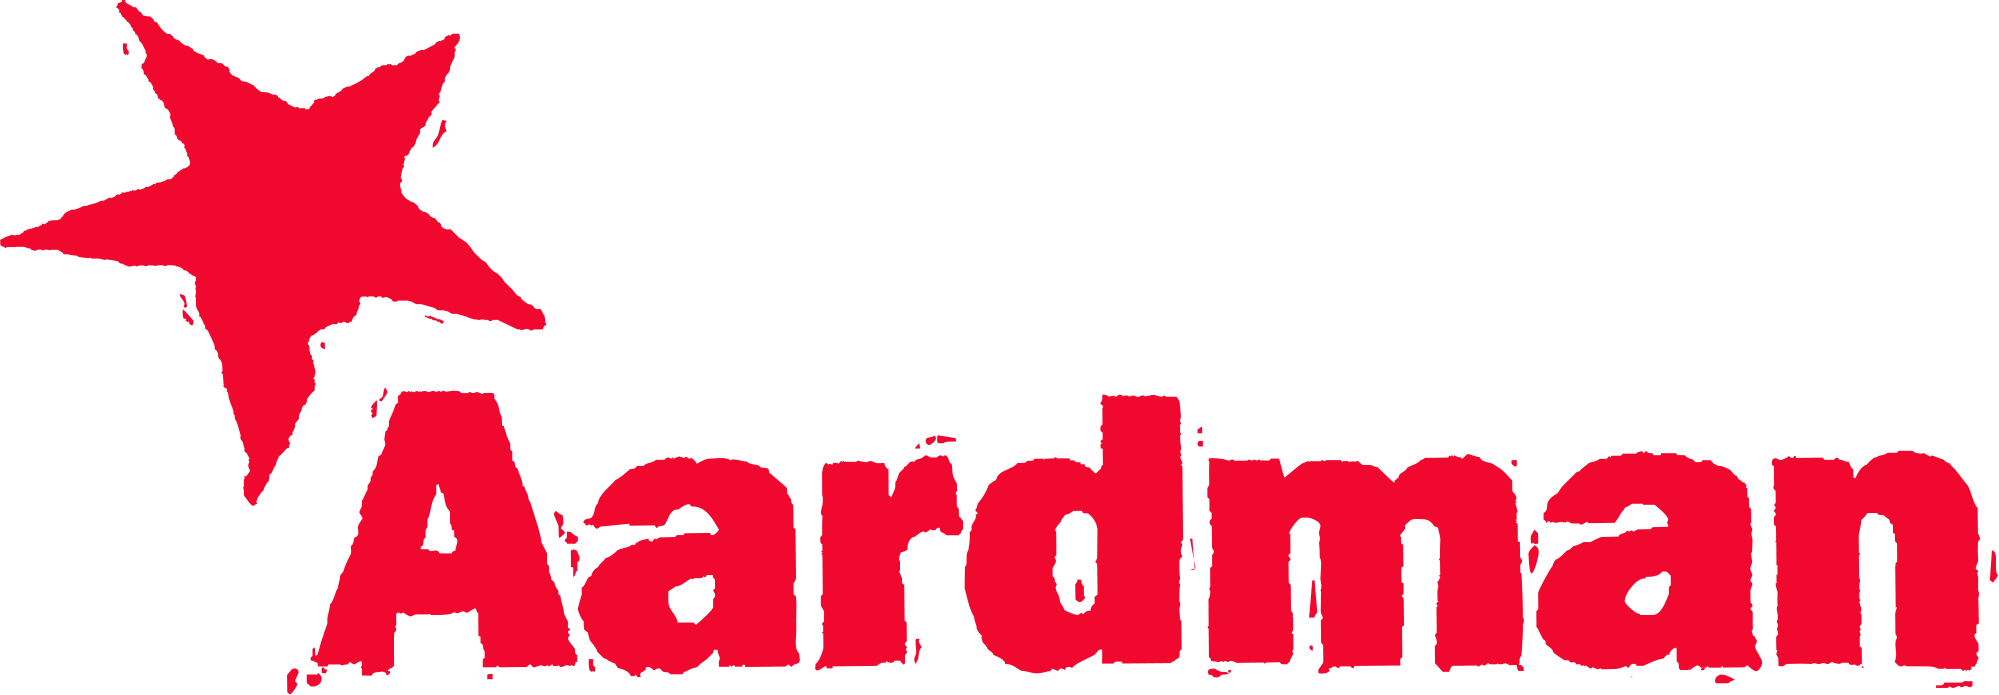 Logo de la société Aardman Animations 5432